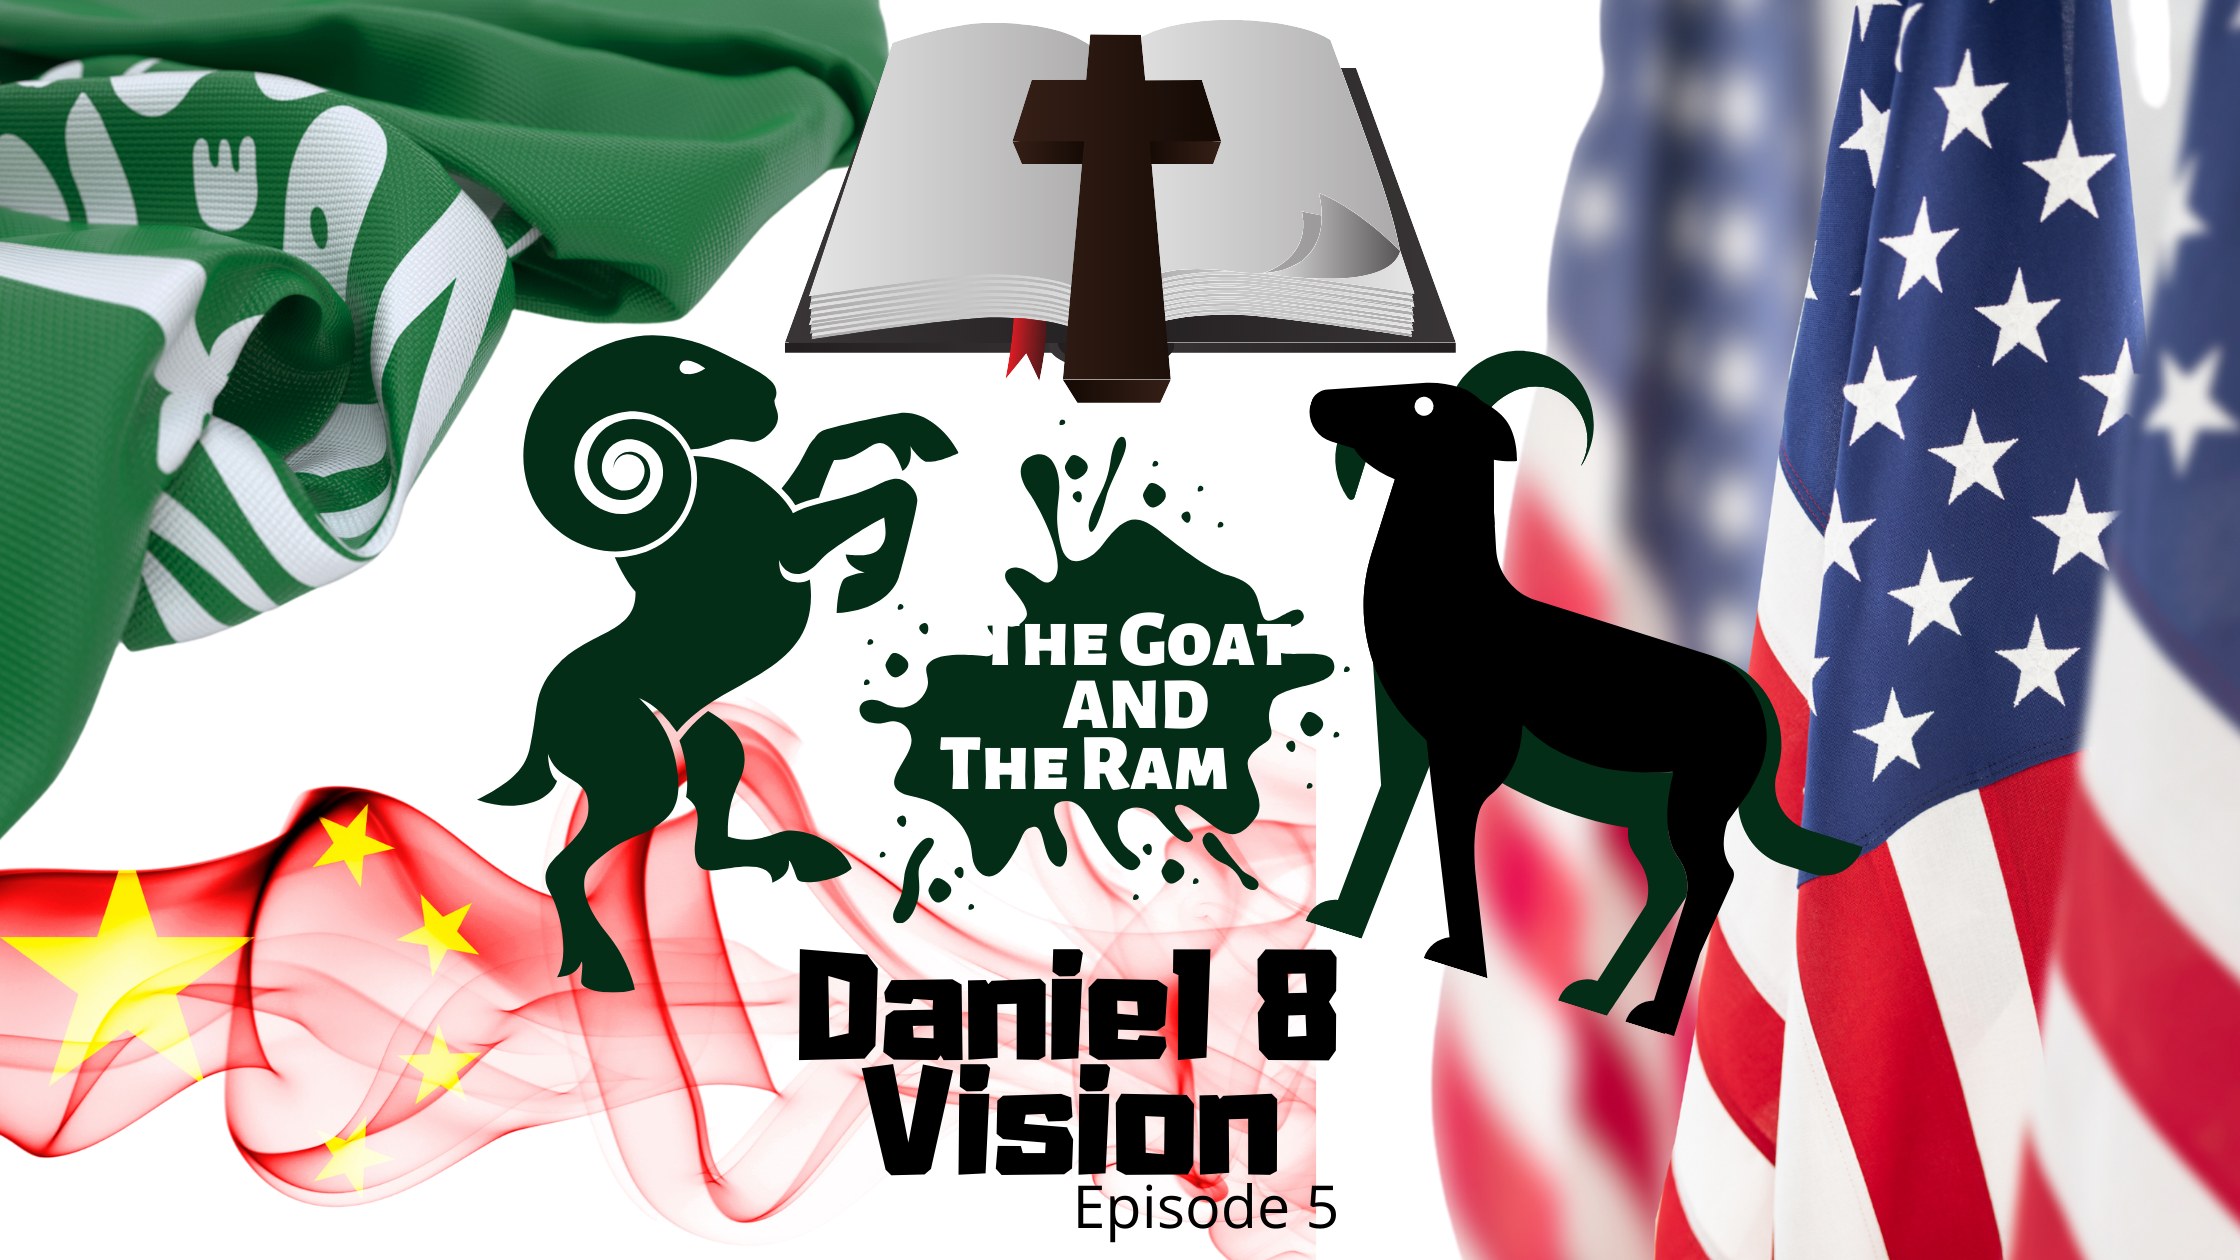 Daniel 8 vision